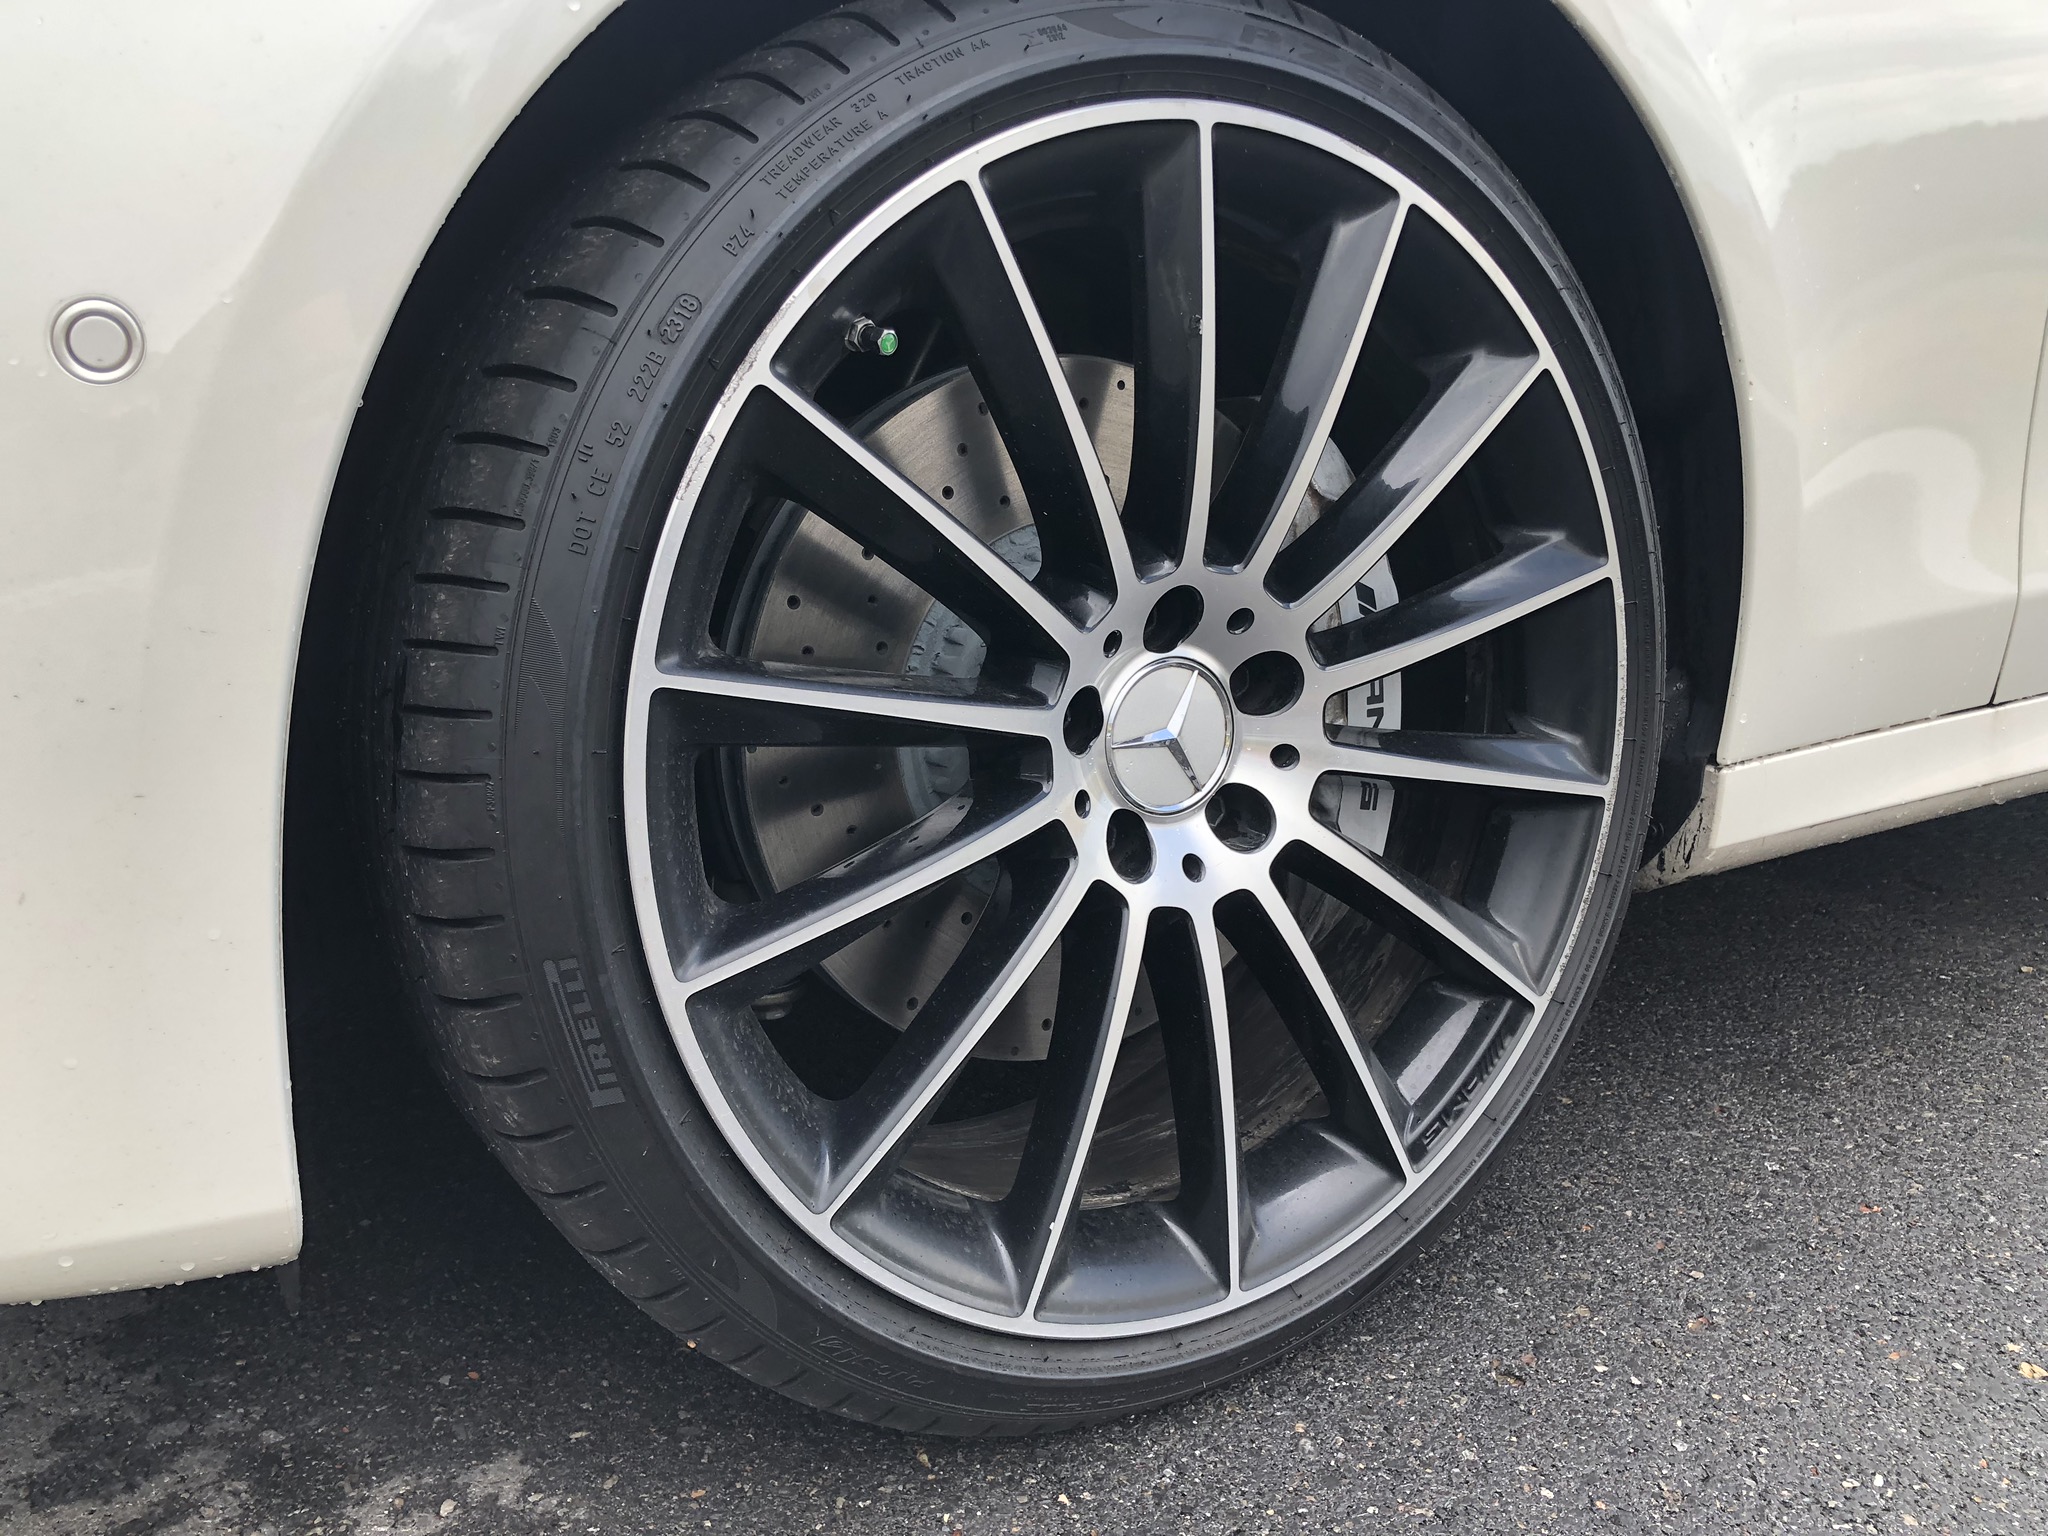 Mercedes C300 wheel damage before repair